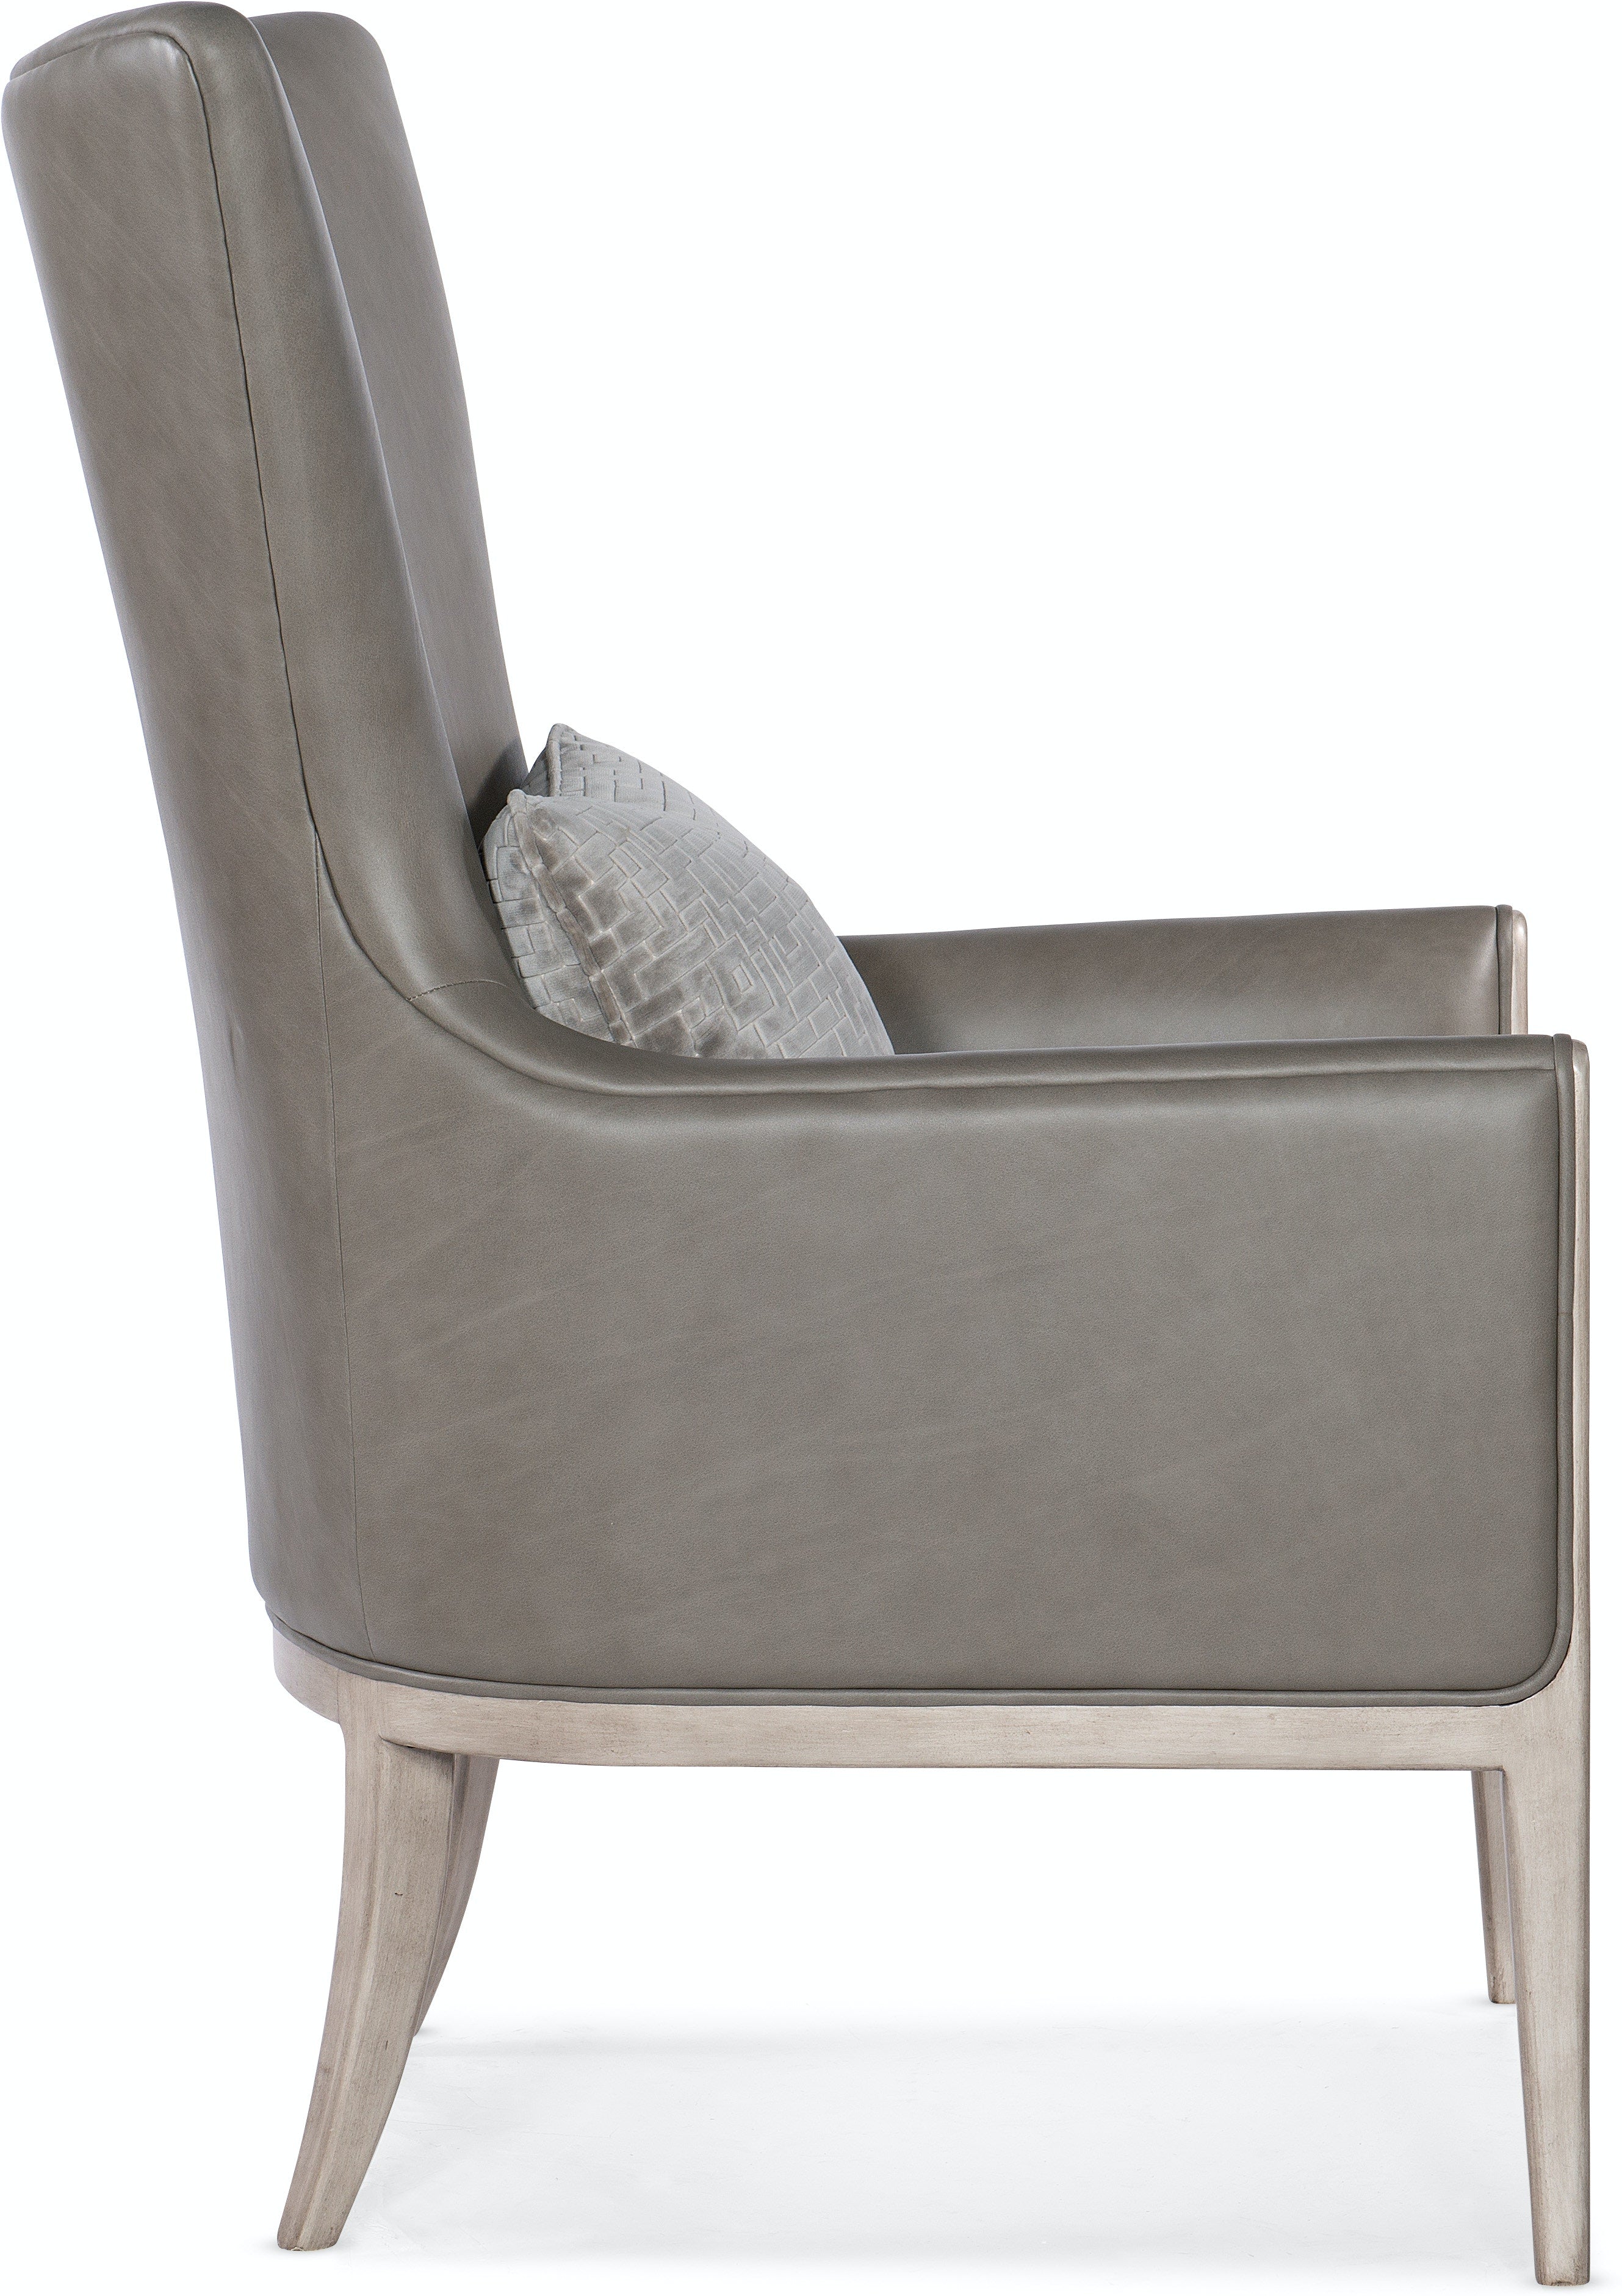 Hooker Furniture Kyndall Club Chair in Grey